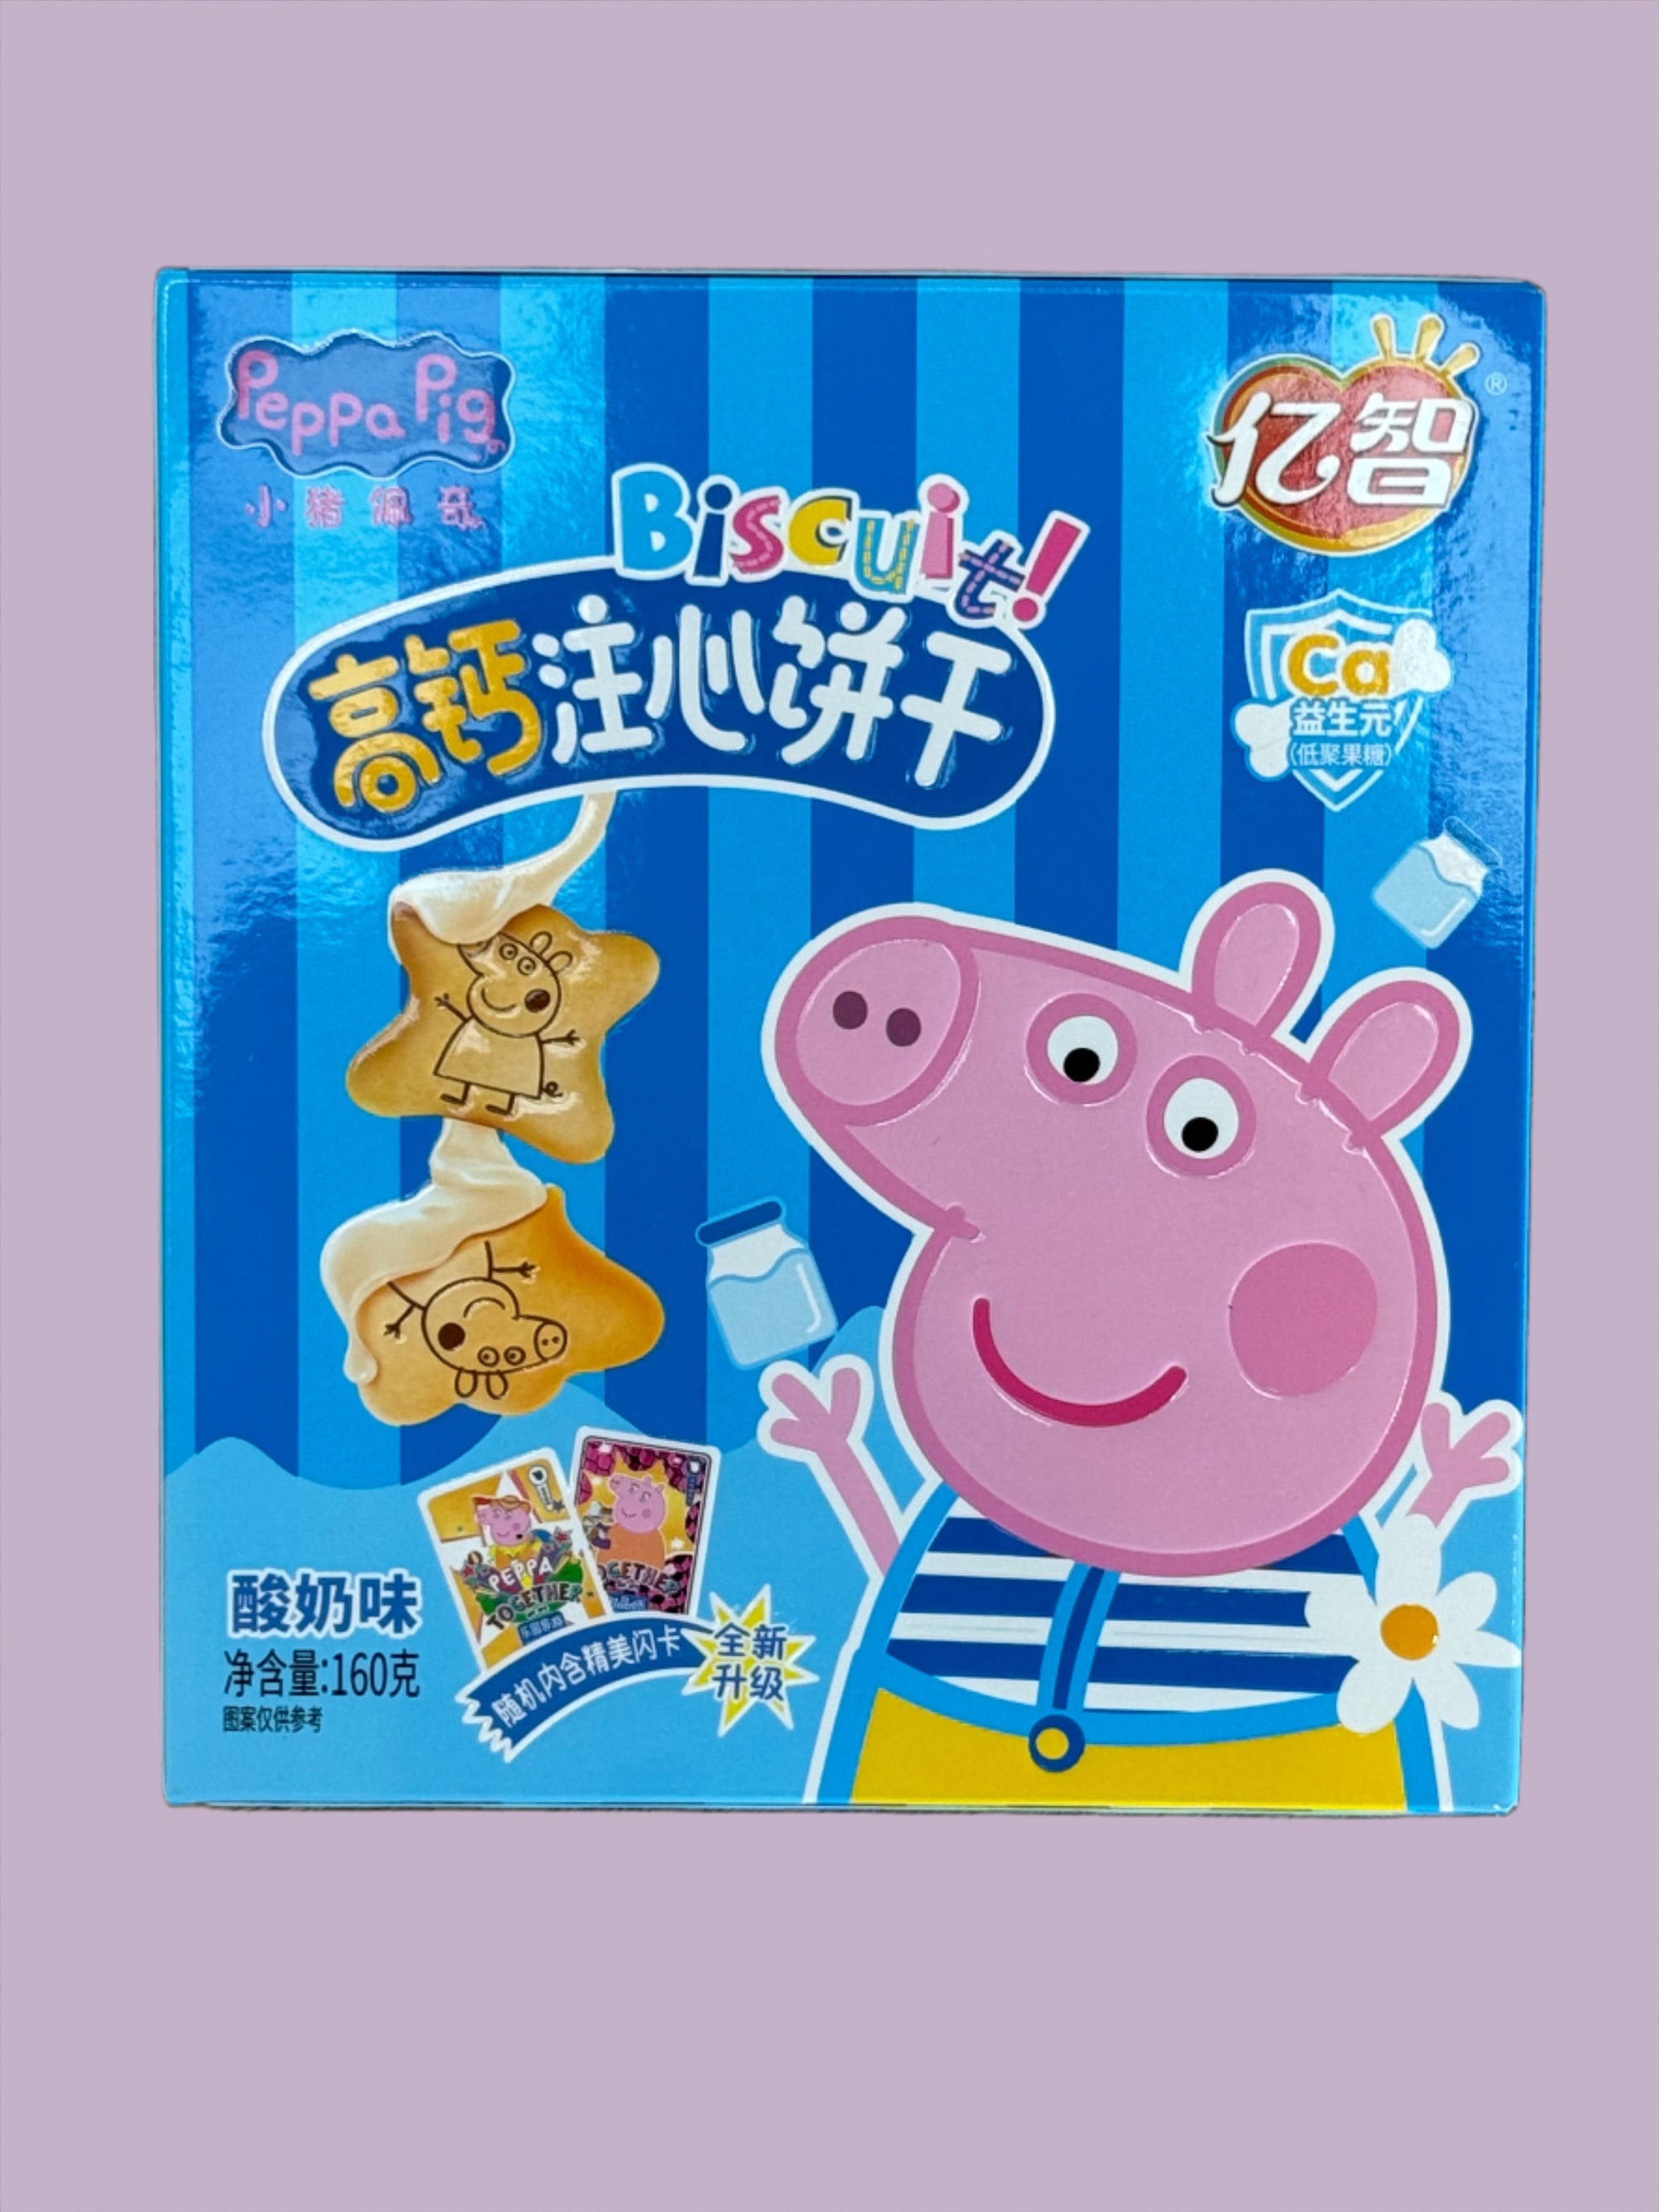 Peppa Pig Biscuit Yogurt Flavor (China) 160g